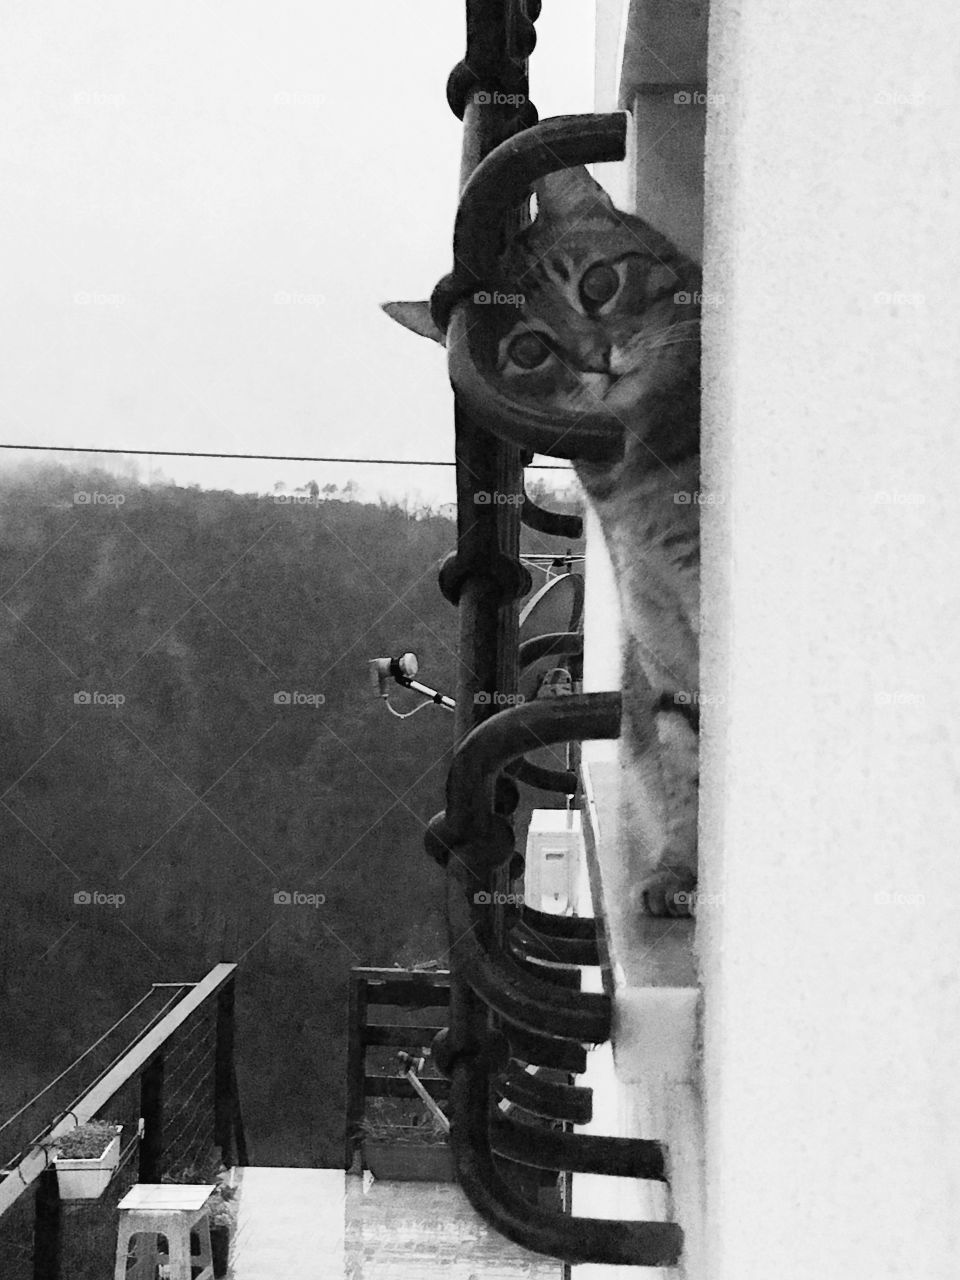 Cat under the rain,black and white 